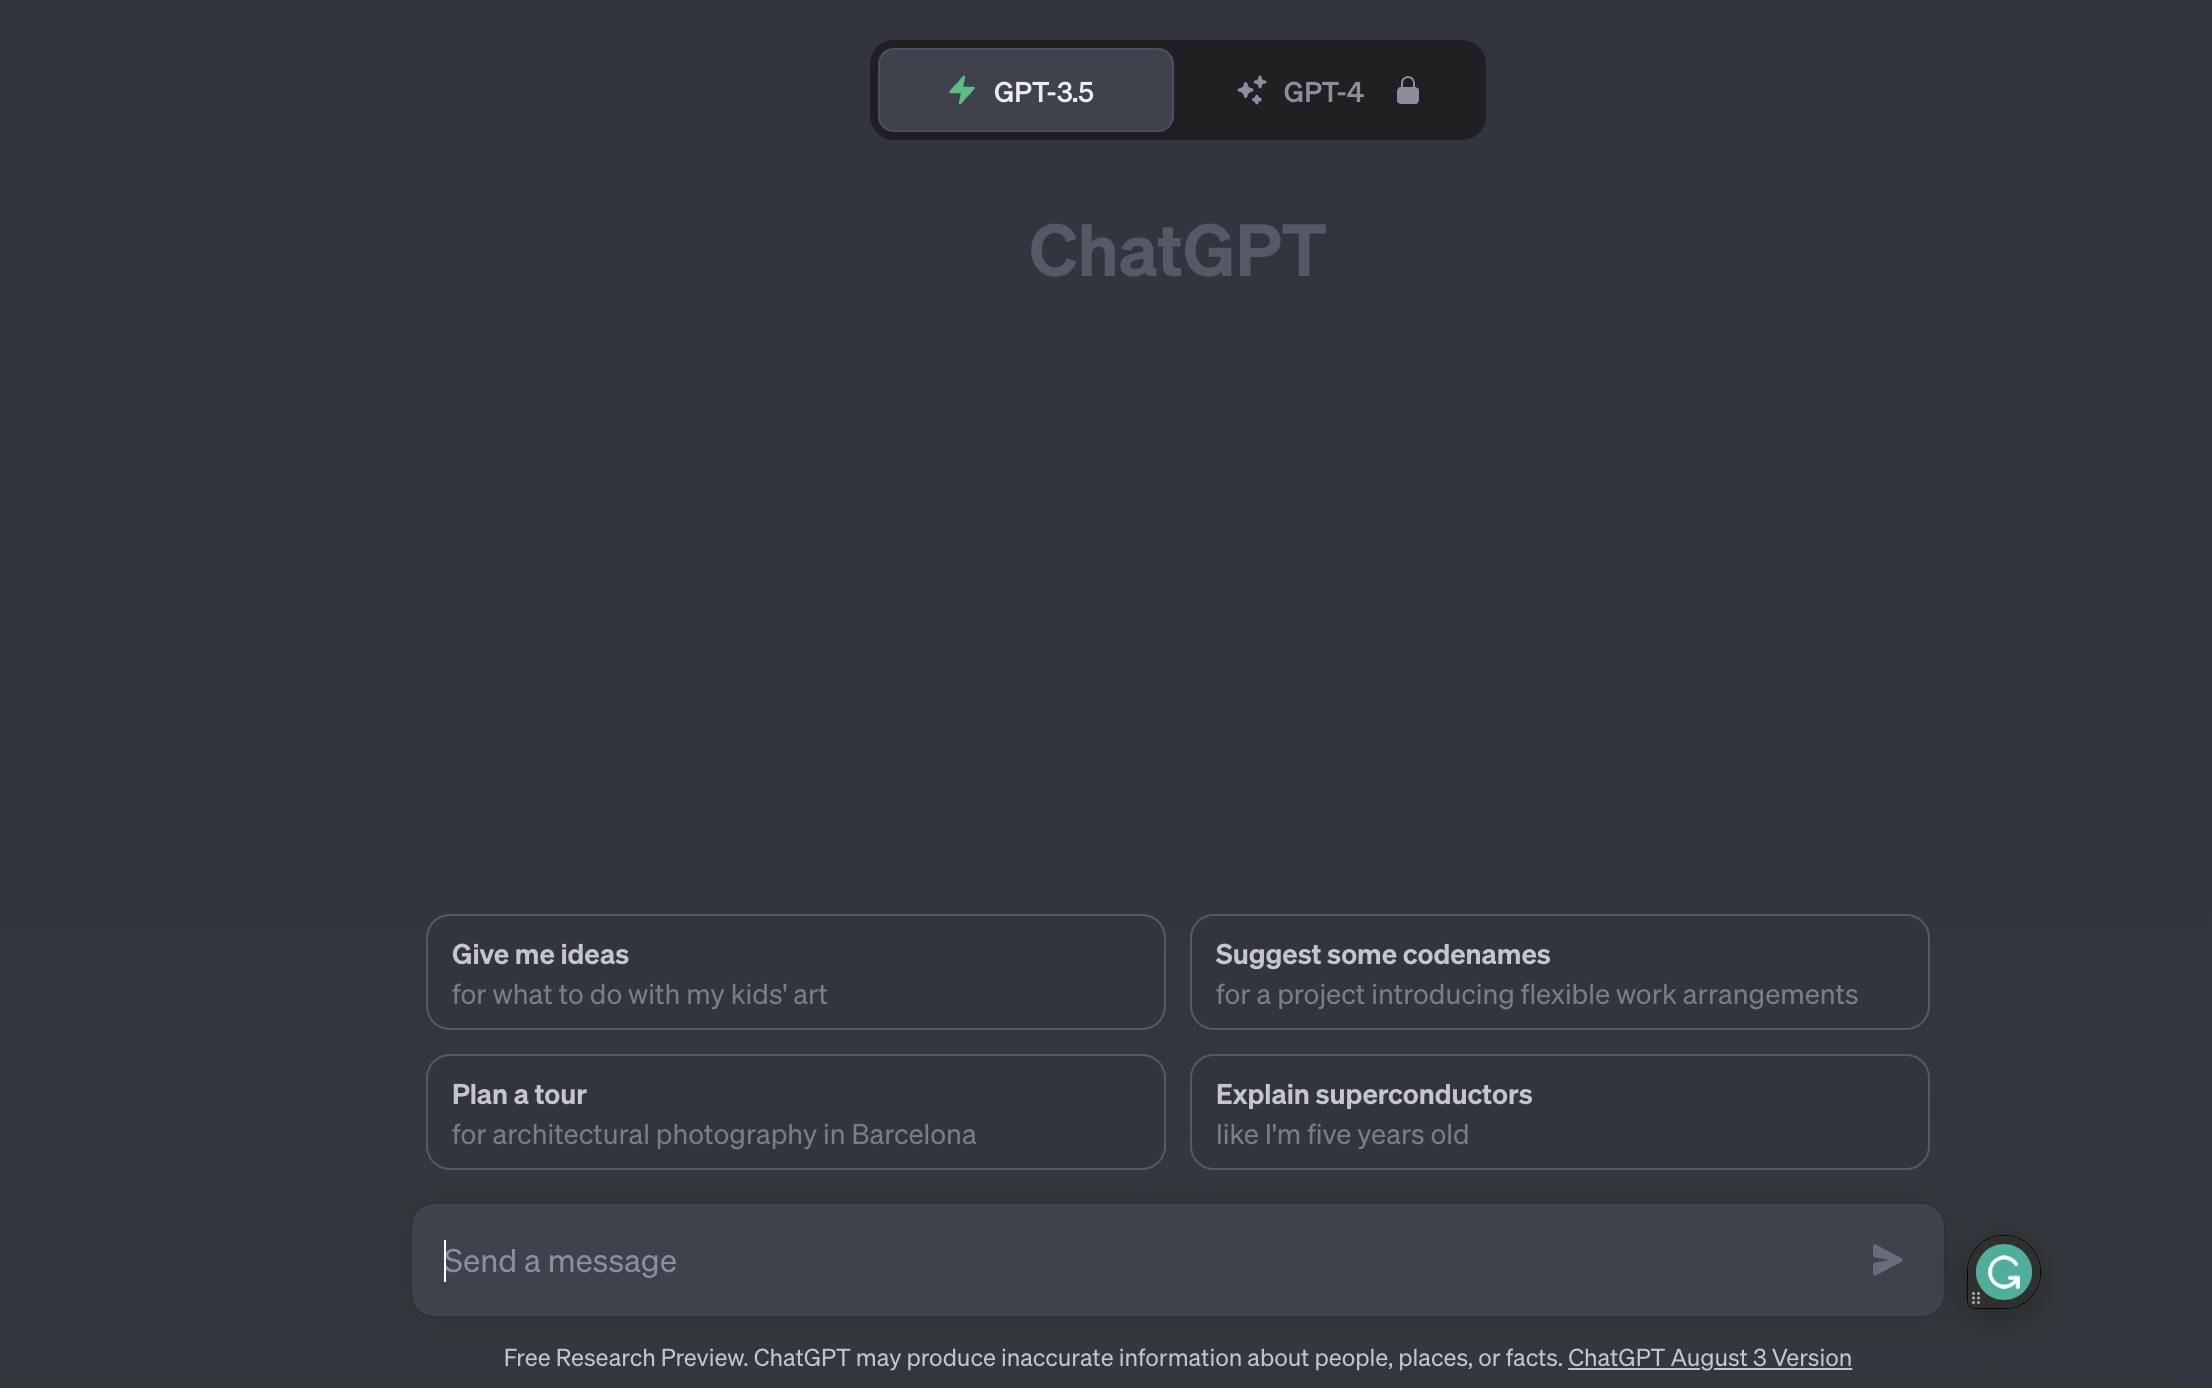 ChatGPT is a powerful AI language model developed by OpenAI.